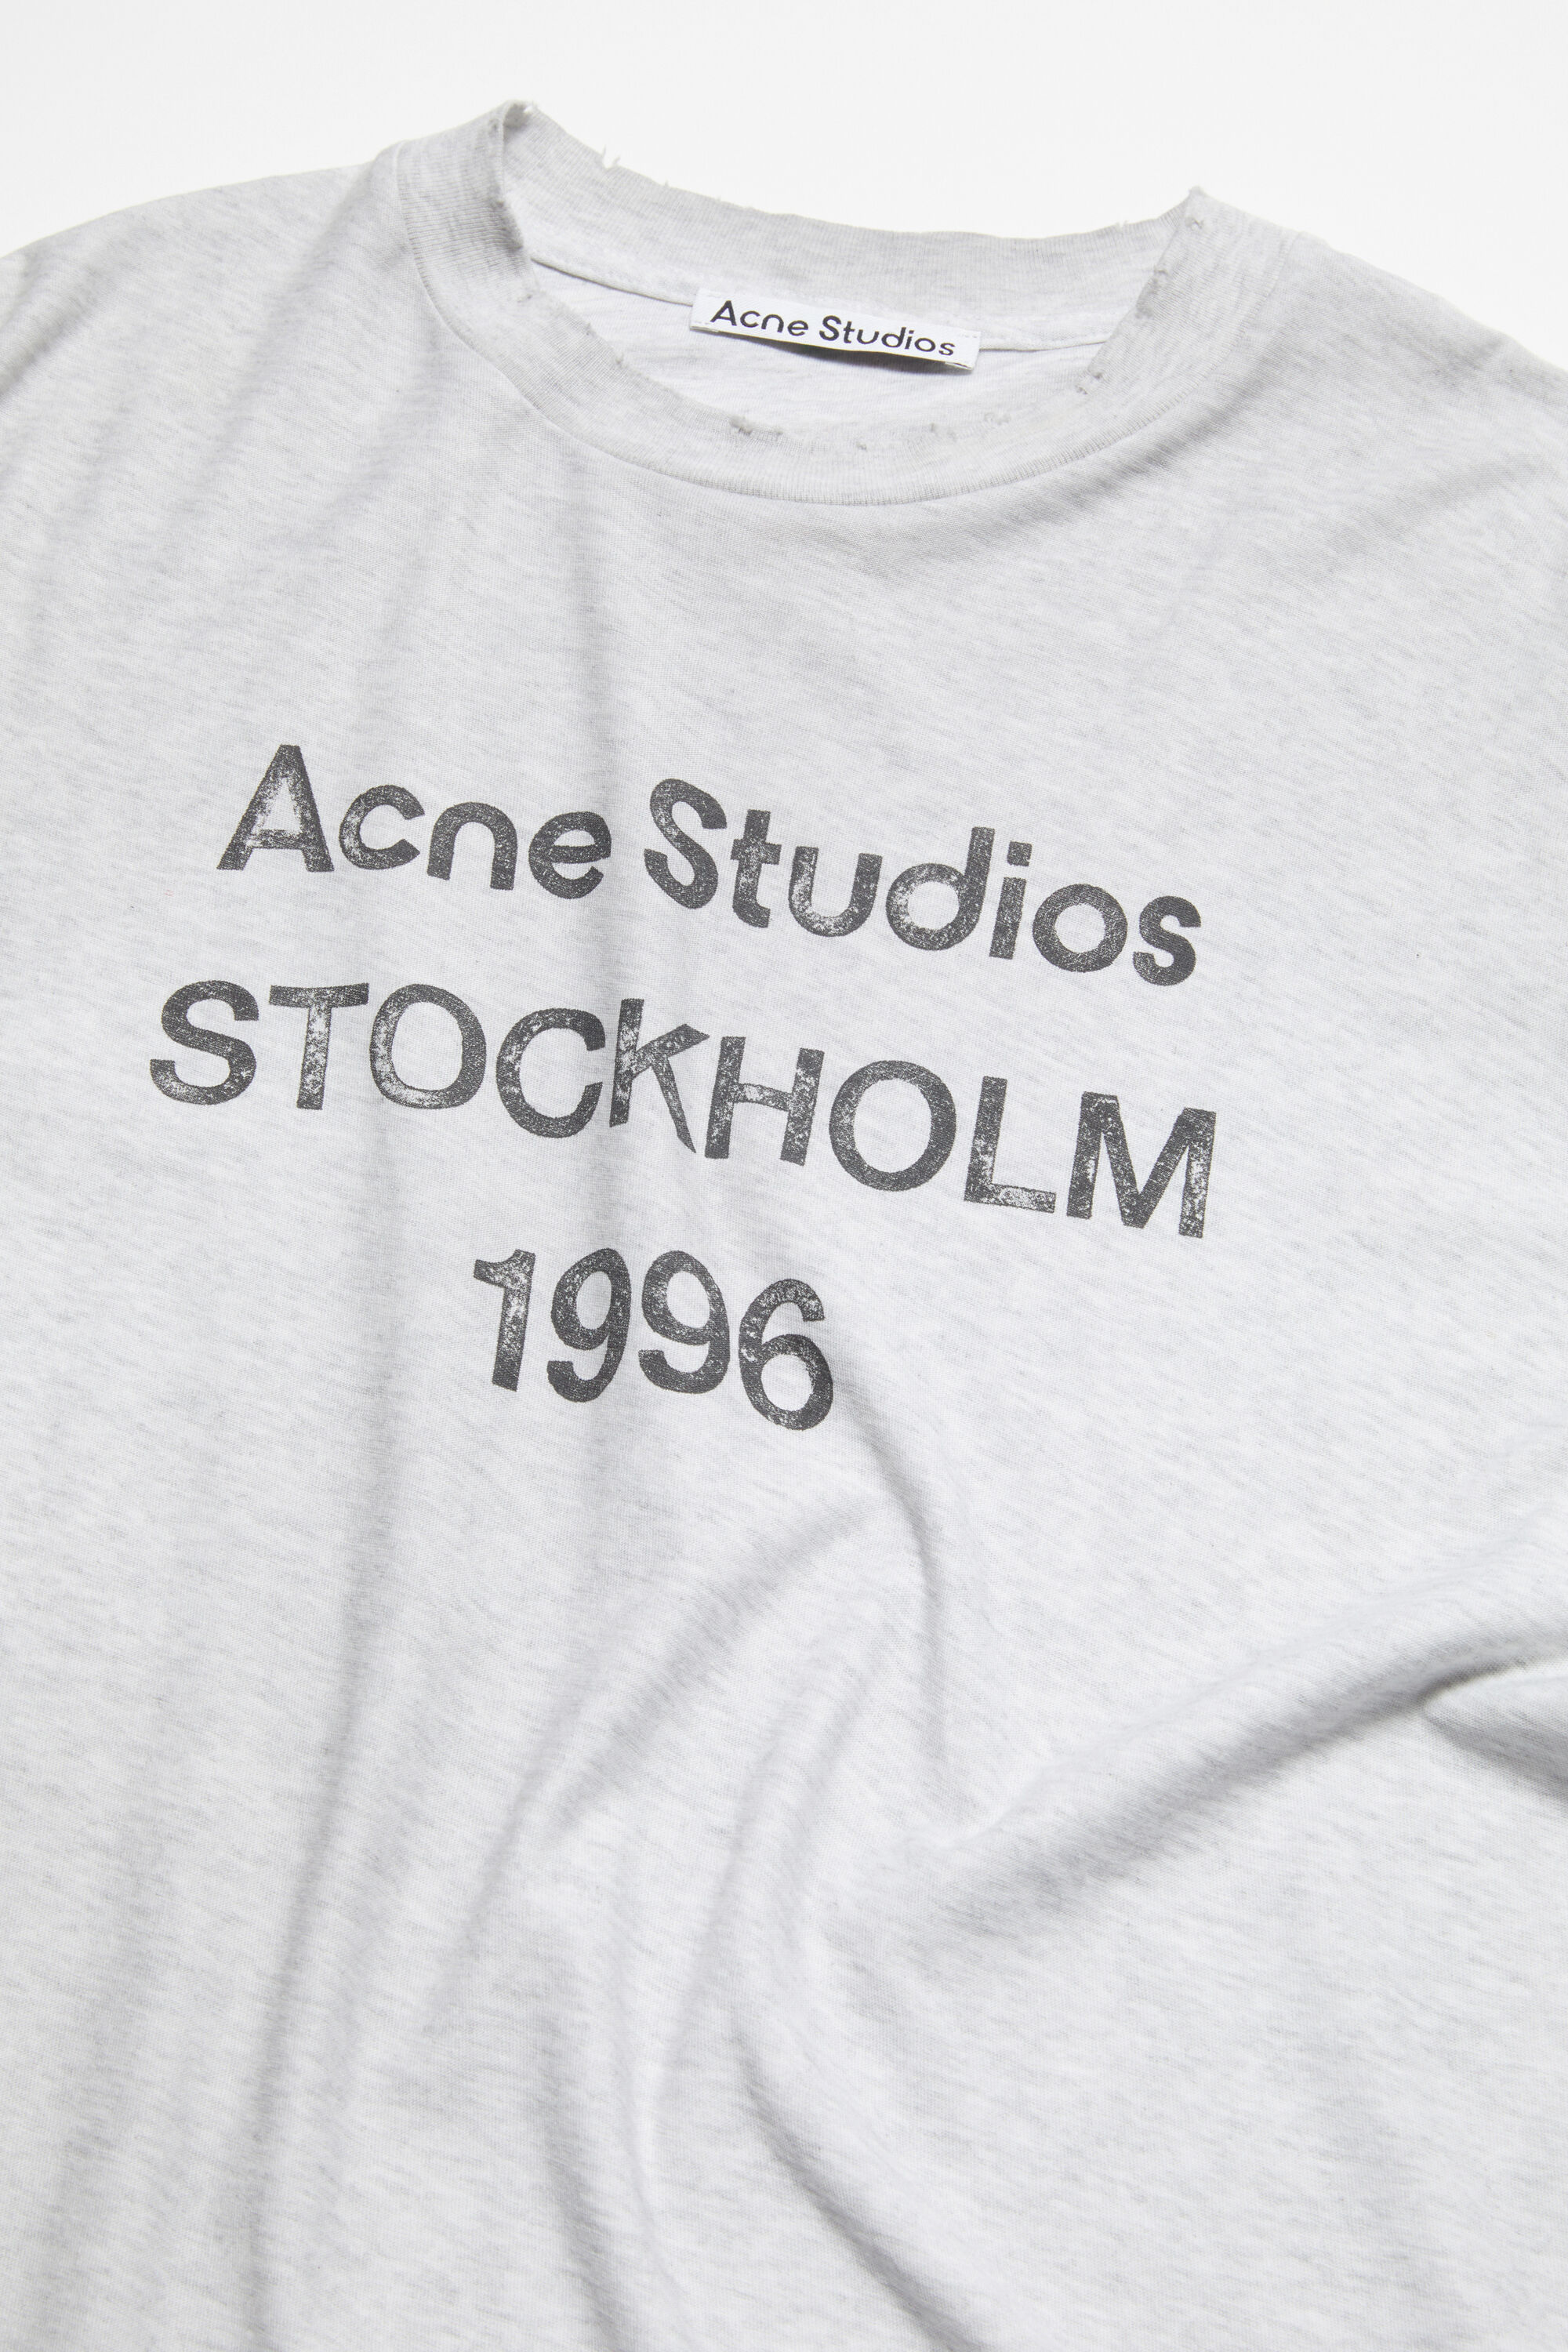 Acne Studios 1996 Tシャツグレー オーバーサイズ